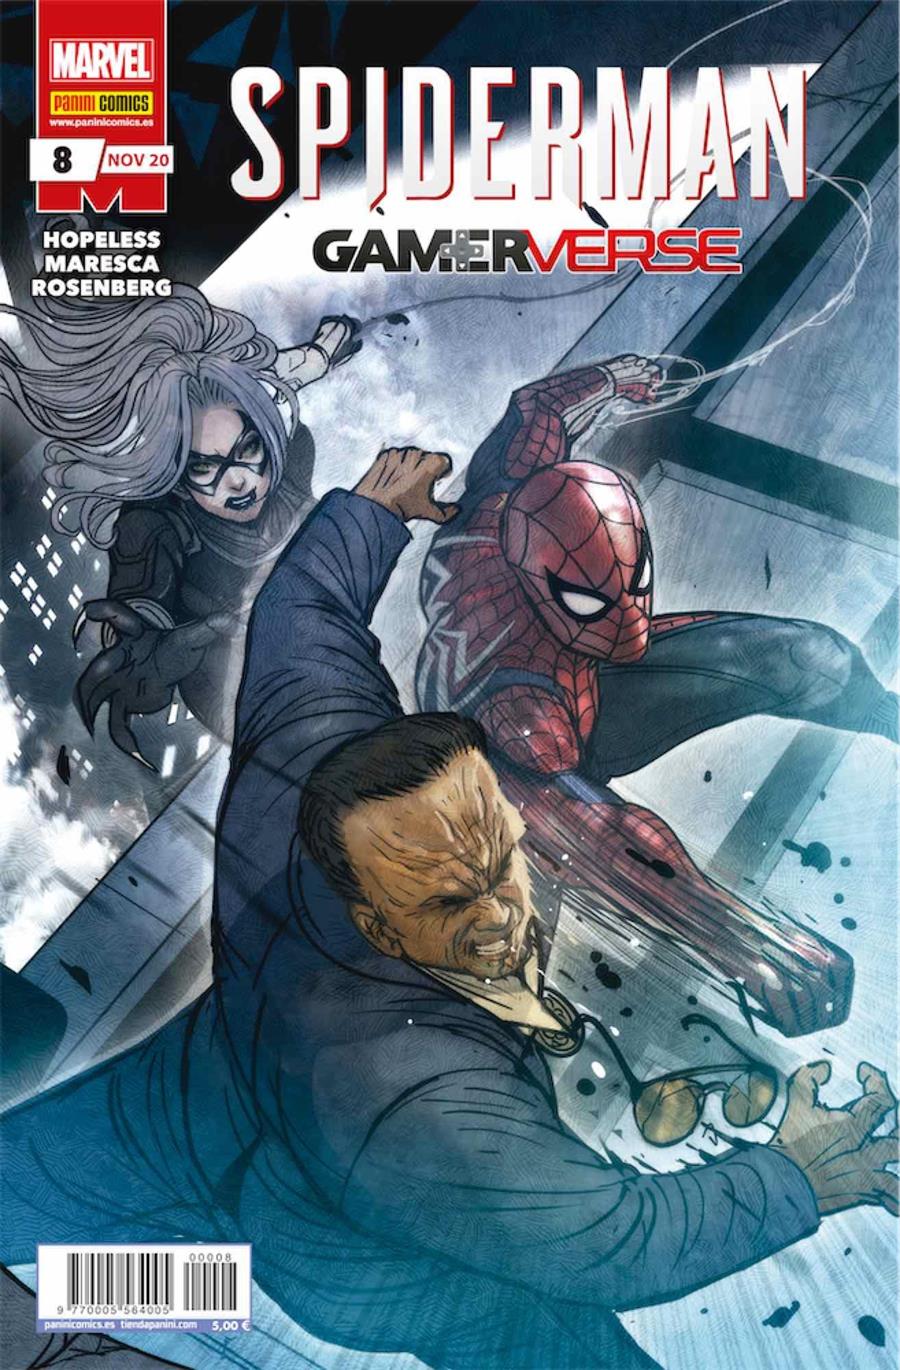 Spiderman: Gamerverse 8 | N1120-PAN64 | "Dennis ""Hopeless"" Hallum, Luca Maresca" | Terra de Còmic - Tu tienda de cómics online especializada en cómics, manga y merchandising